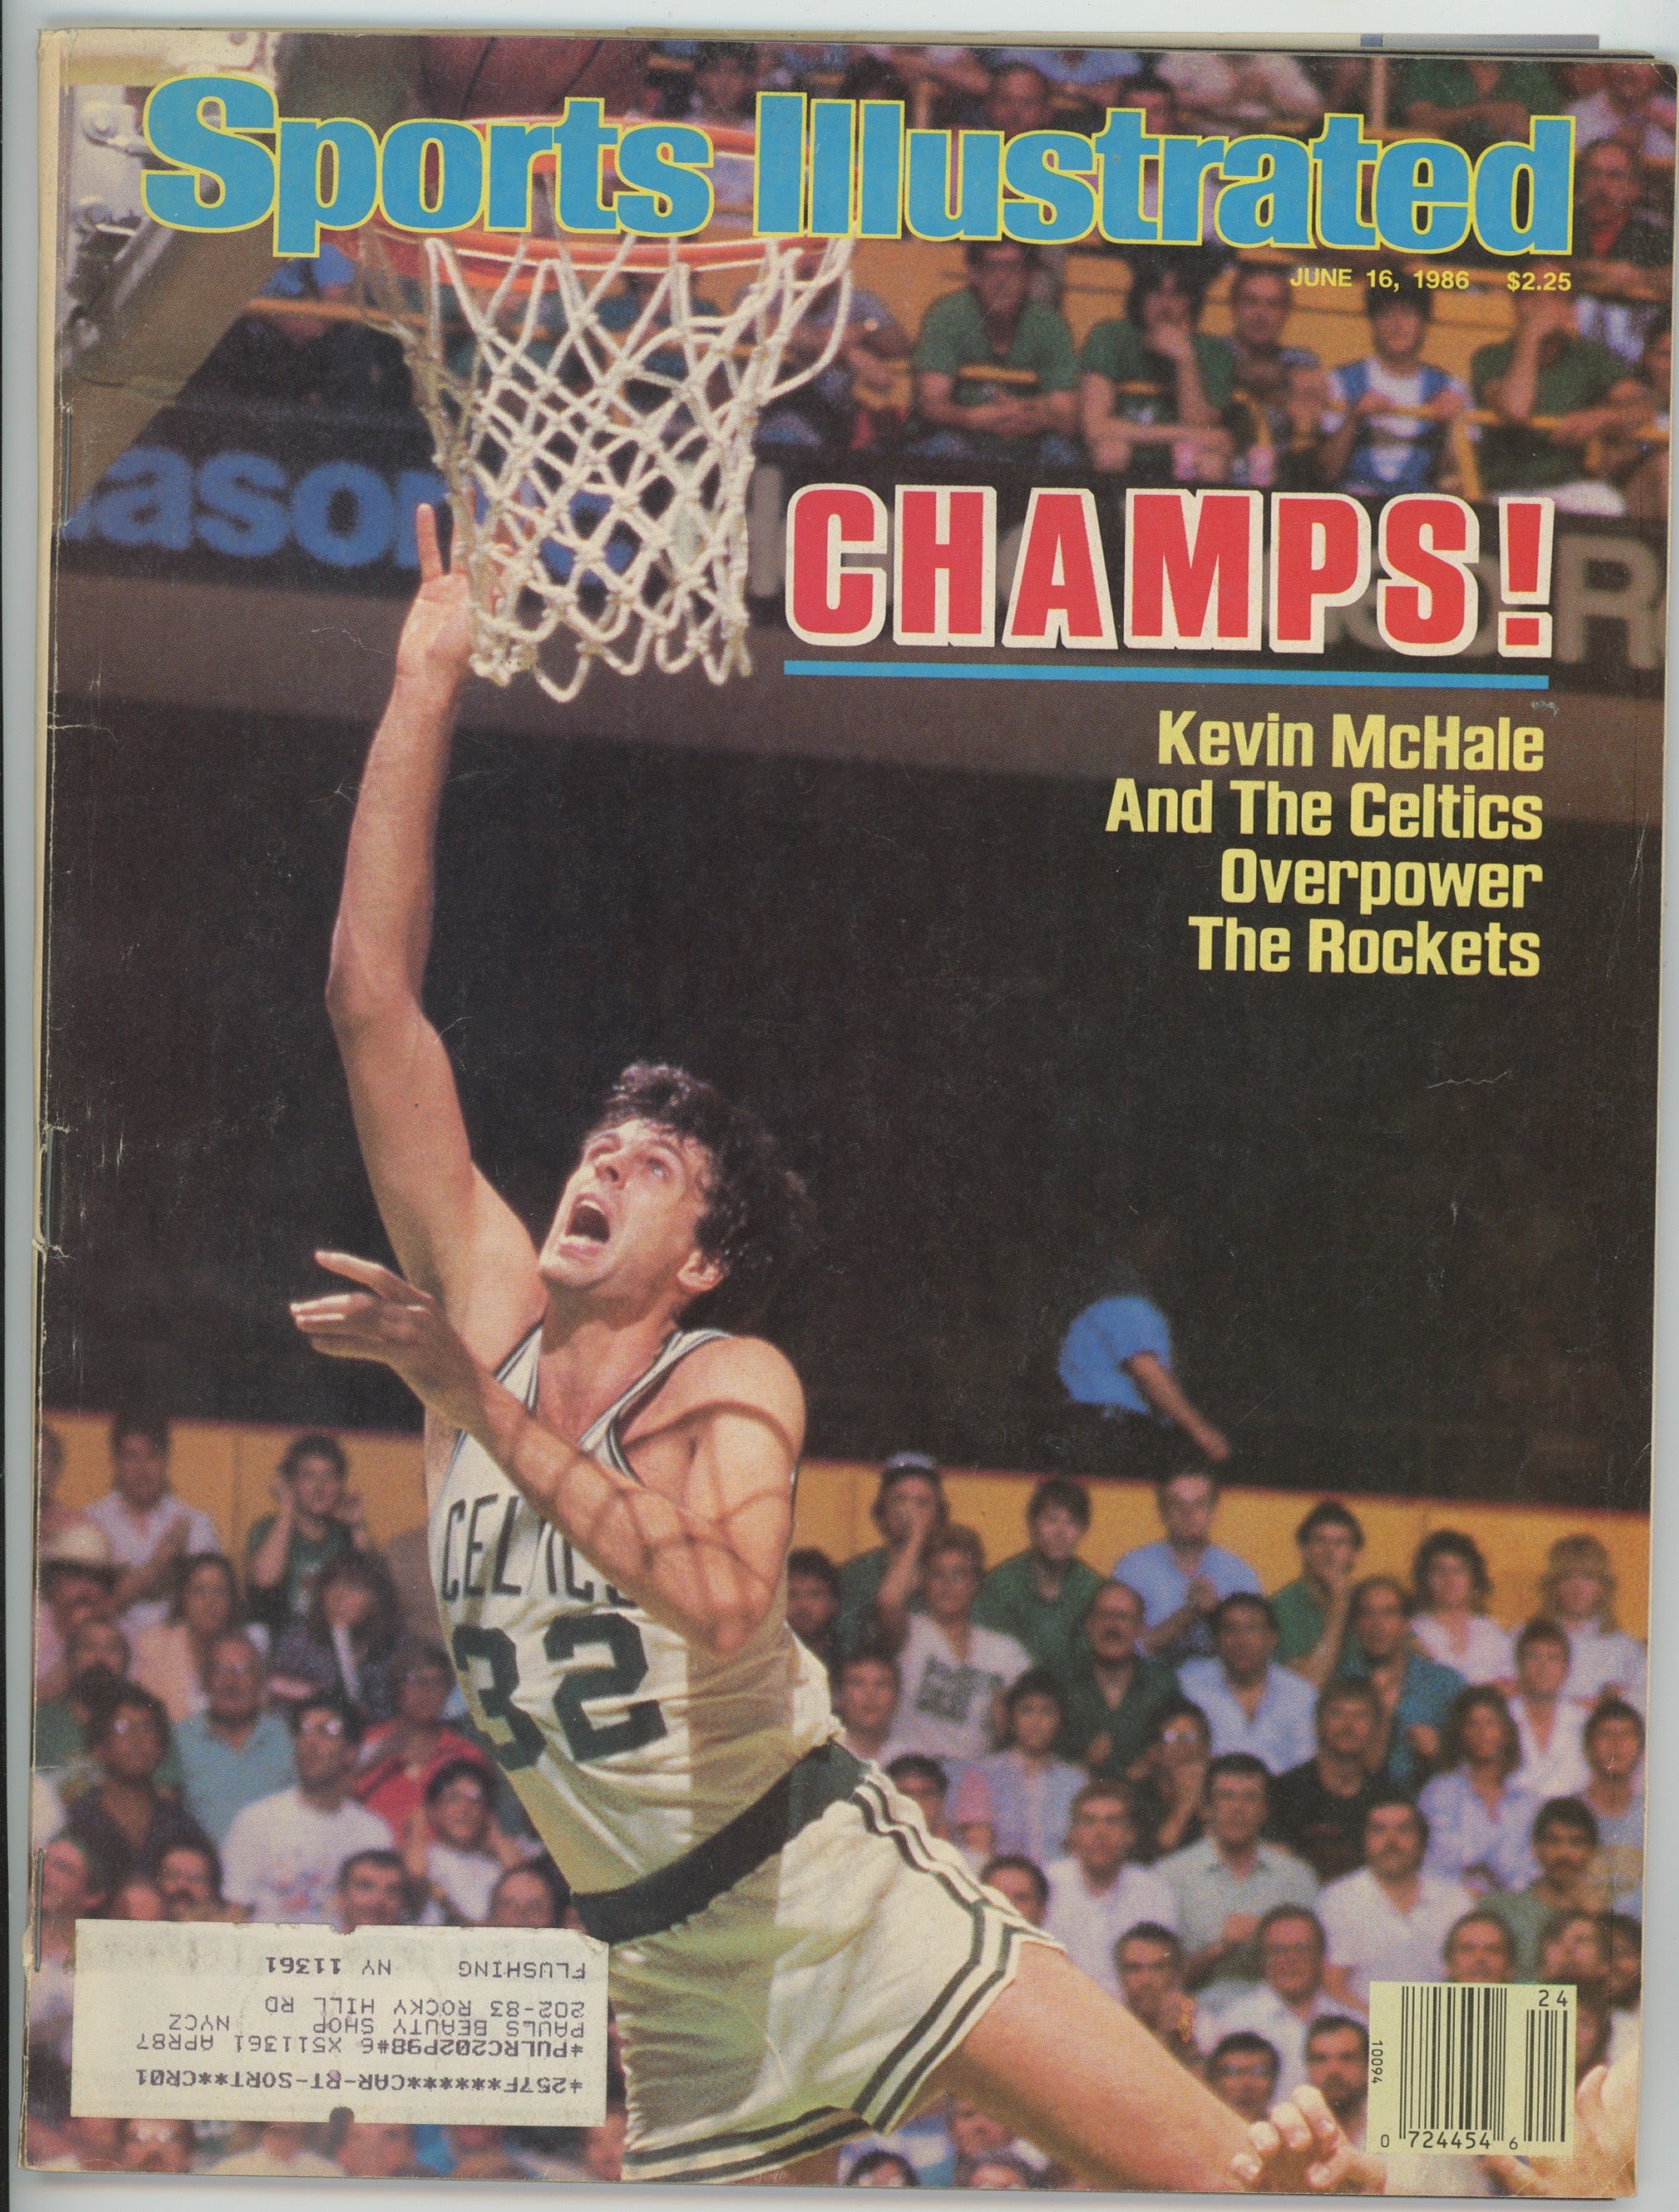 Kevin McHale Boston Celtics "CHAMPS!" 6/16/86 Sports Illustrated ML 2